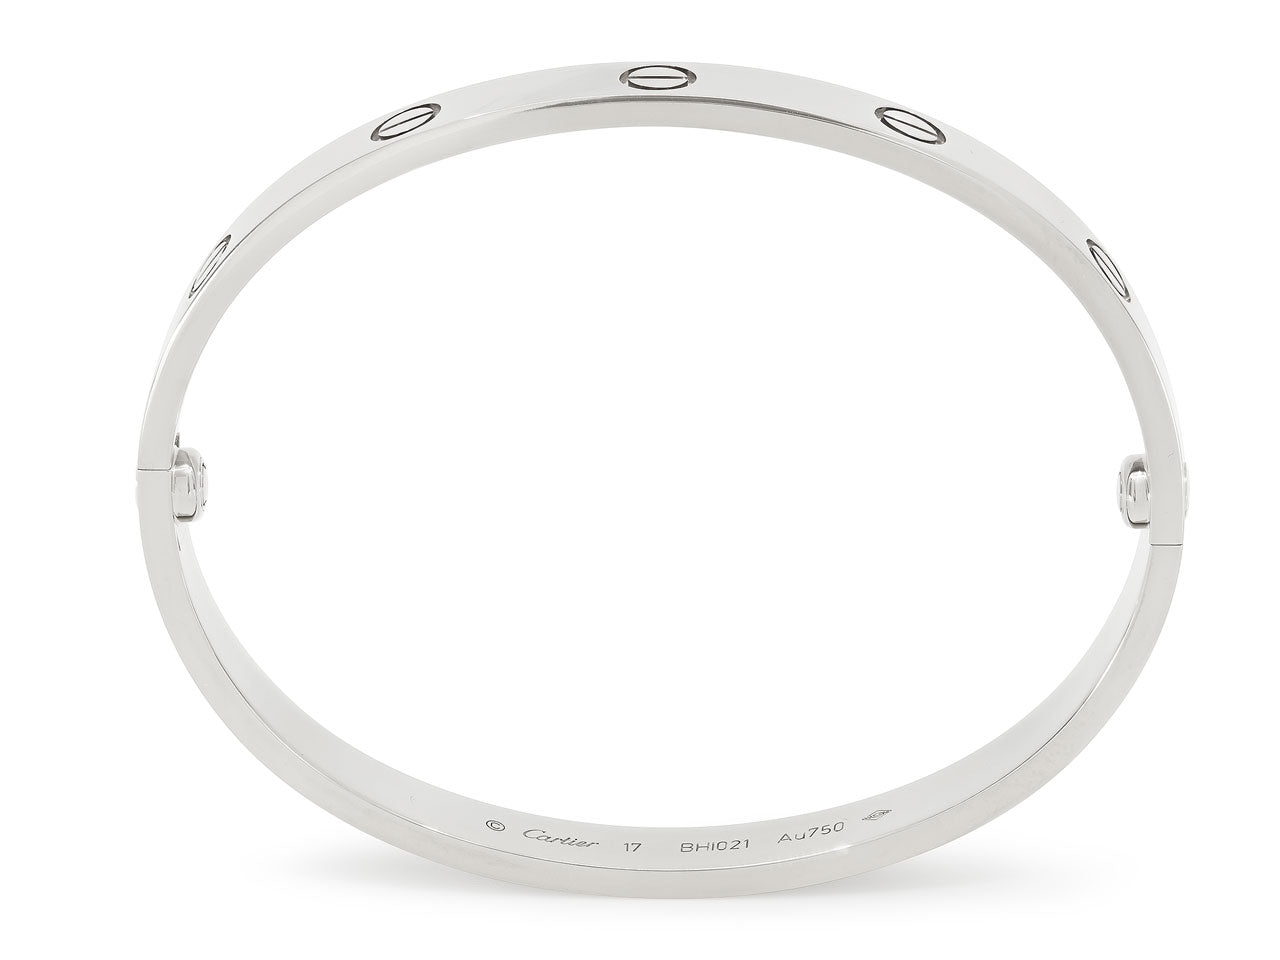 Cartier 'Love' Bracelet, 18K White Gold, Size 17